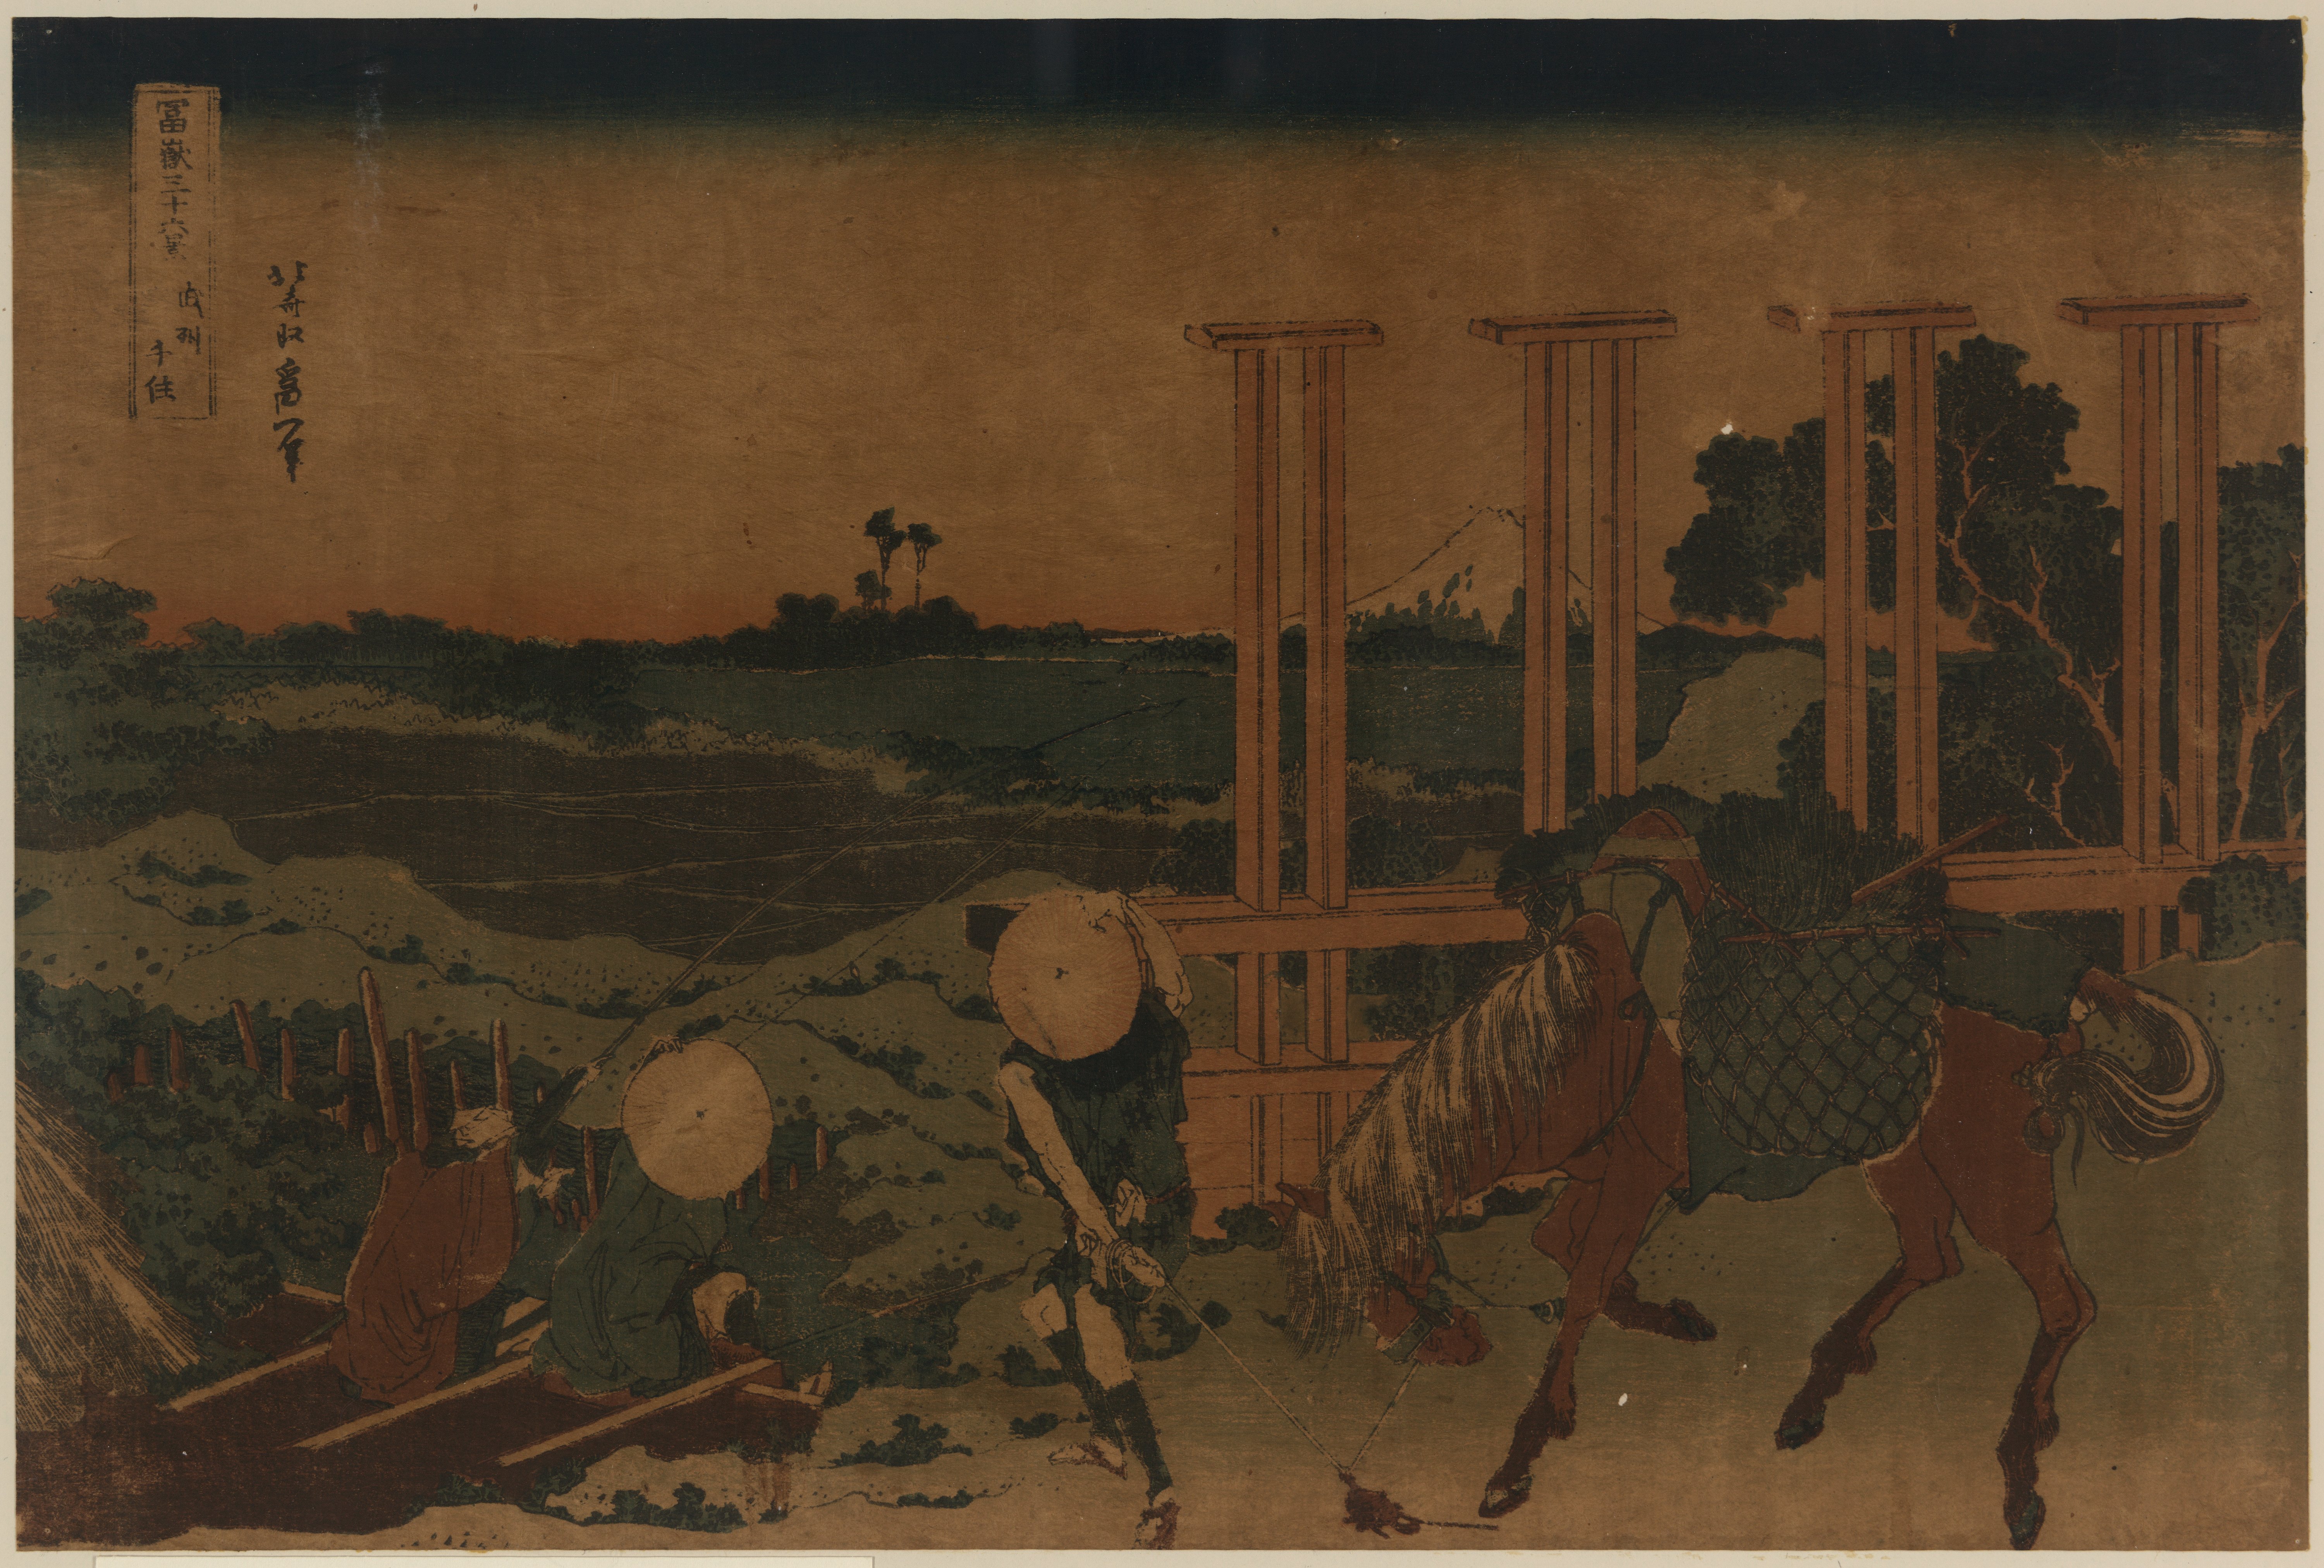 Katsushika Hokusai. Senju in Musashi Province, from the series Thirty-six Views of Mount Fuji